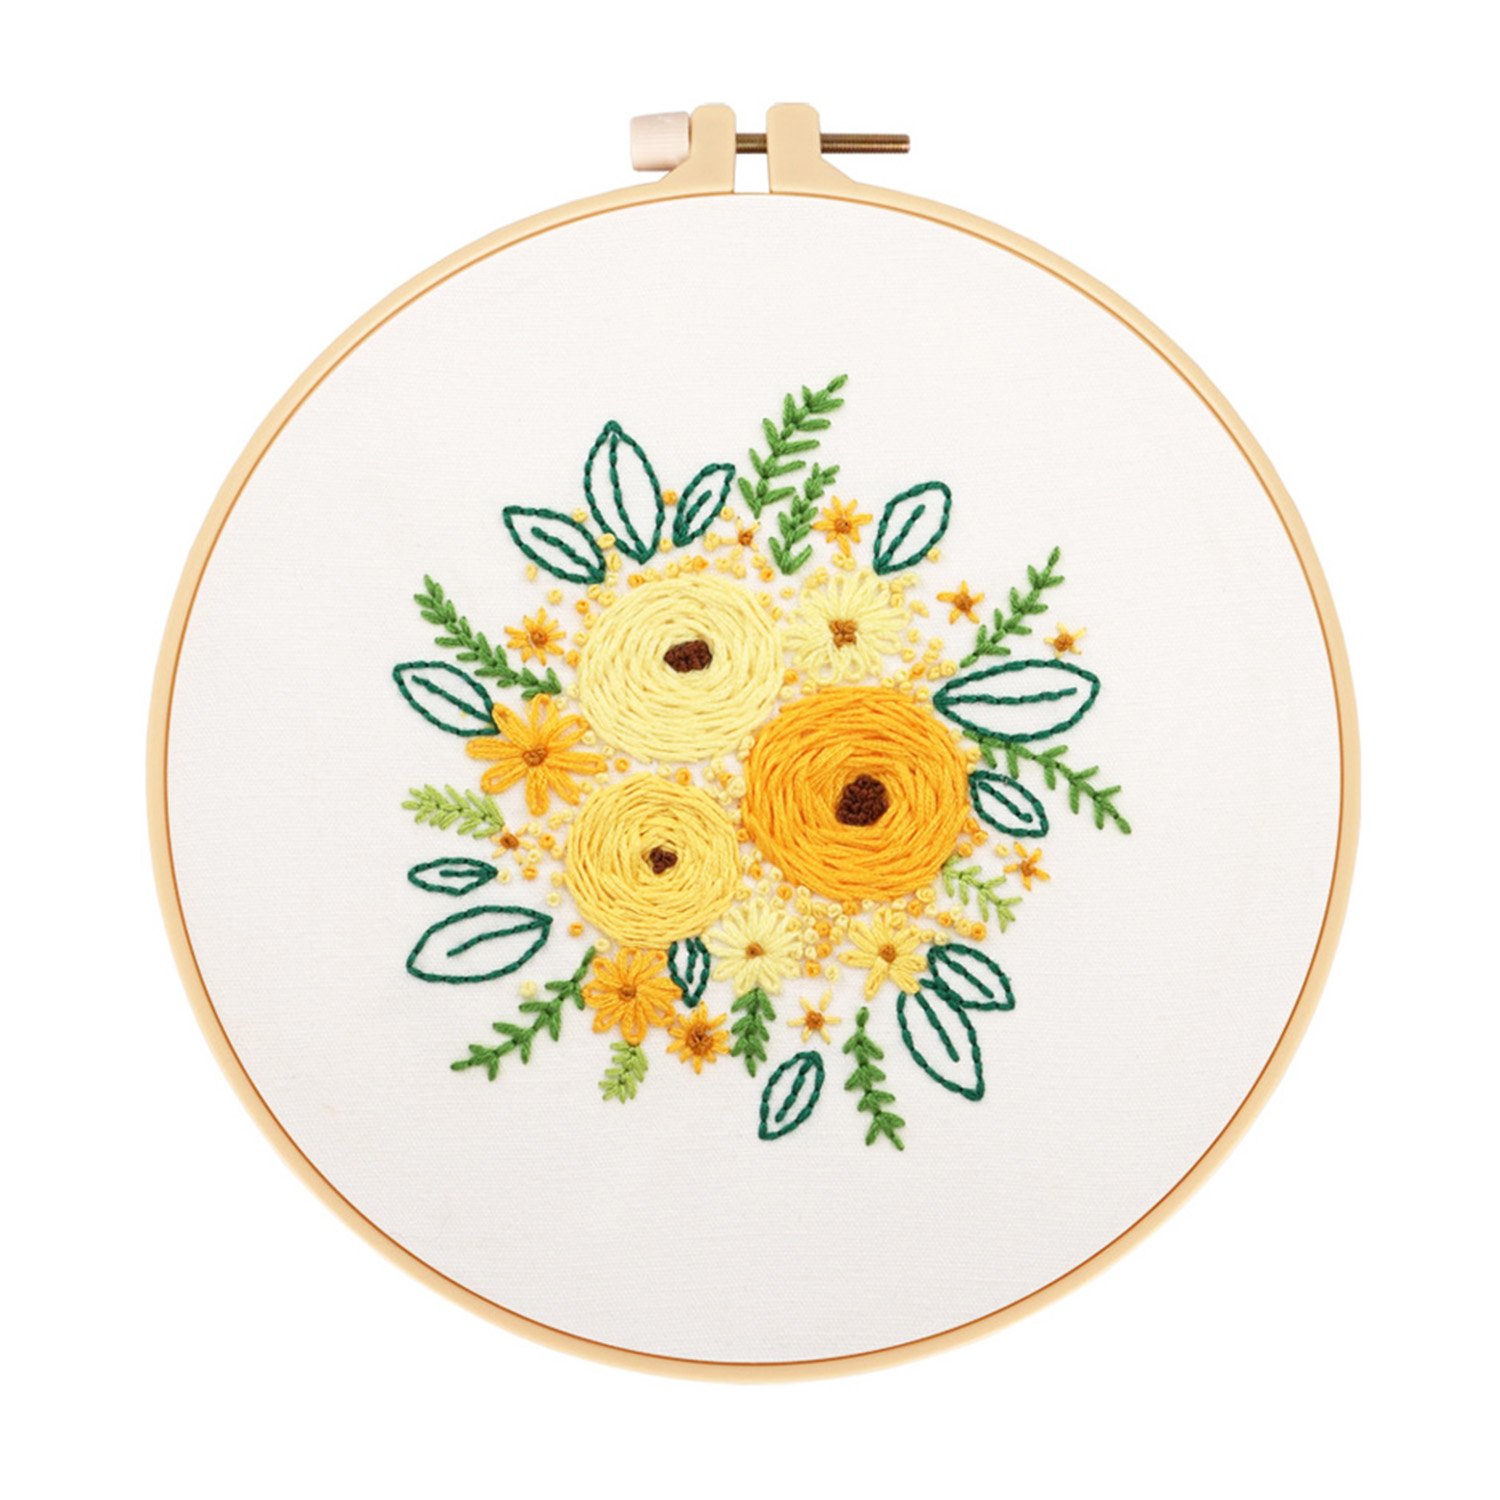 DIY Handmade Embroidery Cross stitch kit - Golden Bouquet Pattern